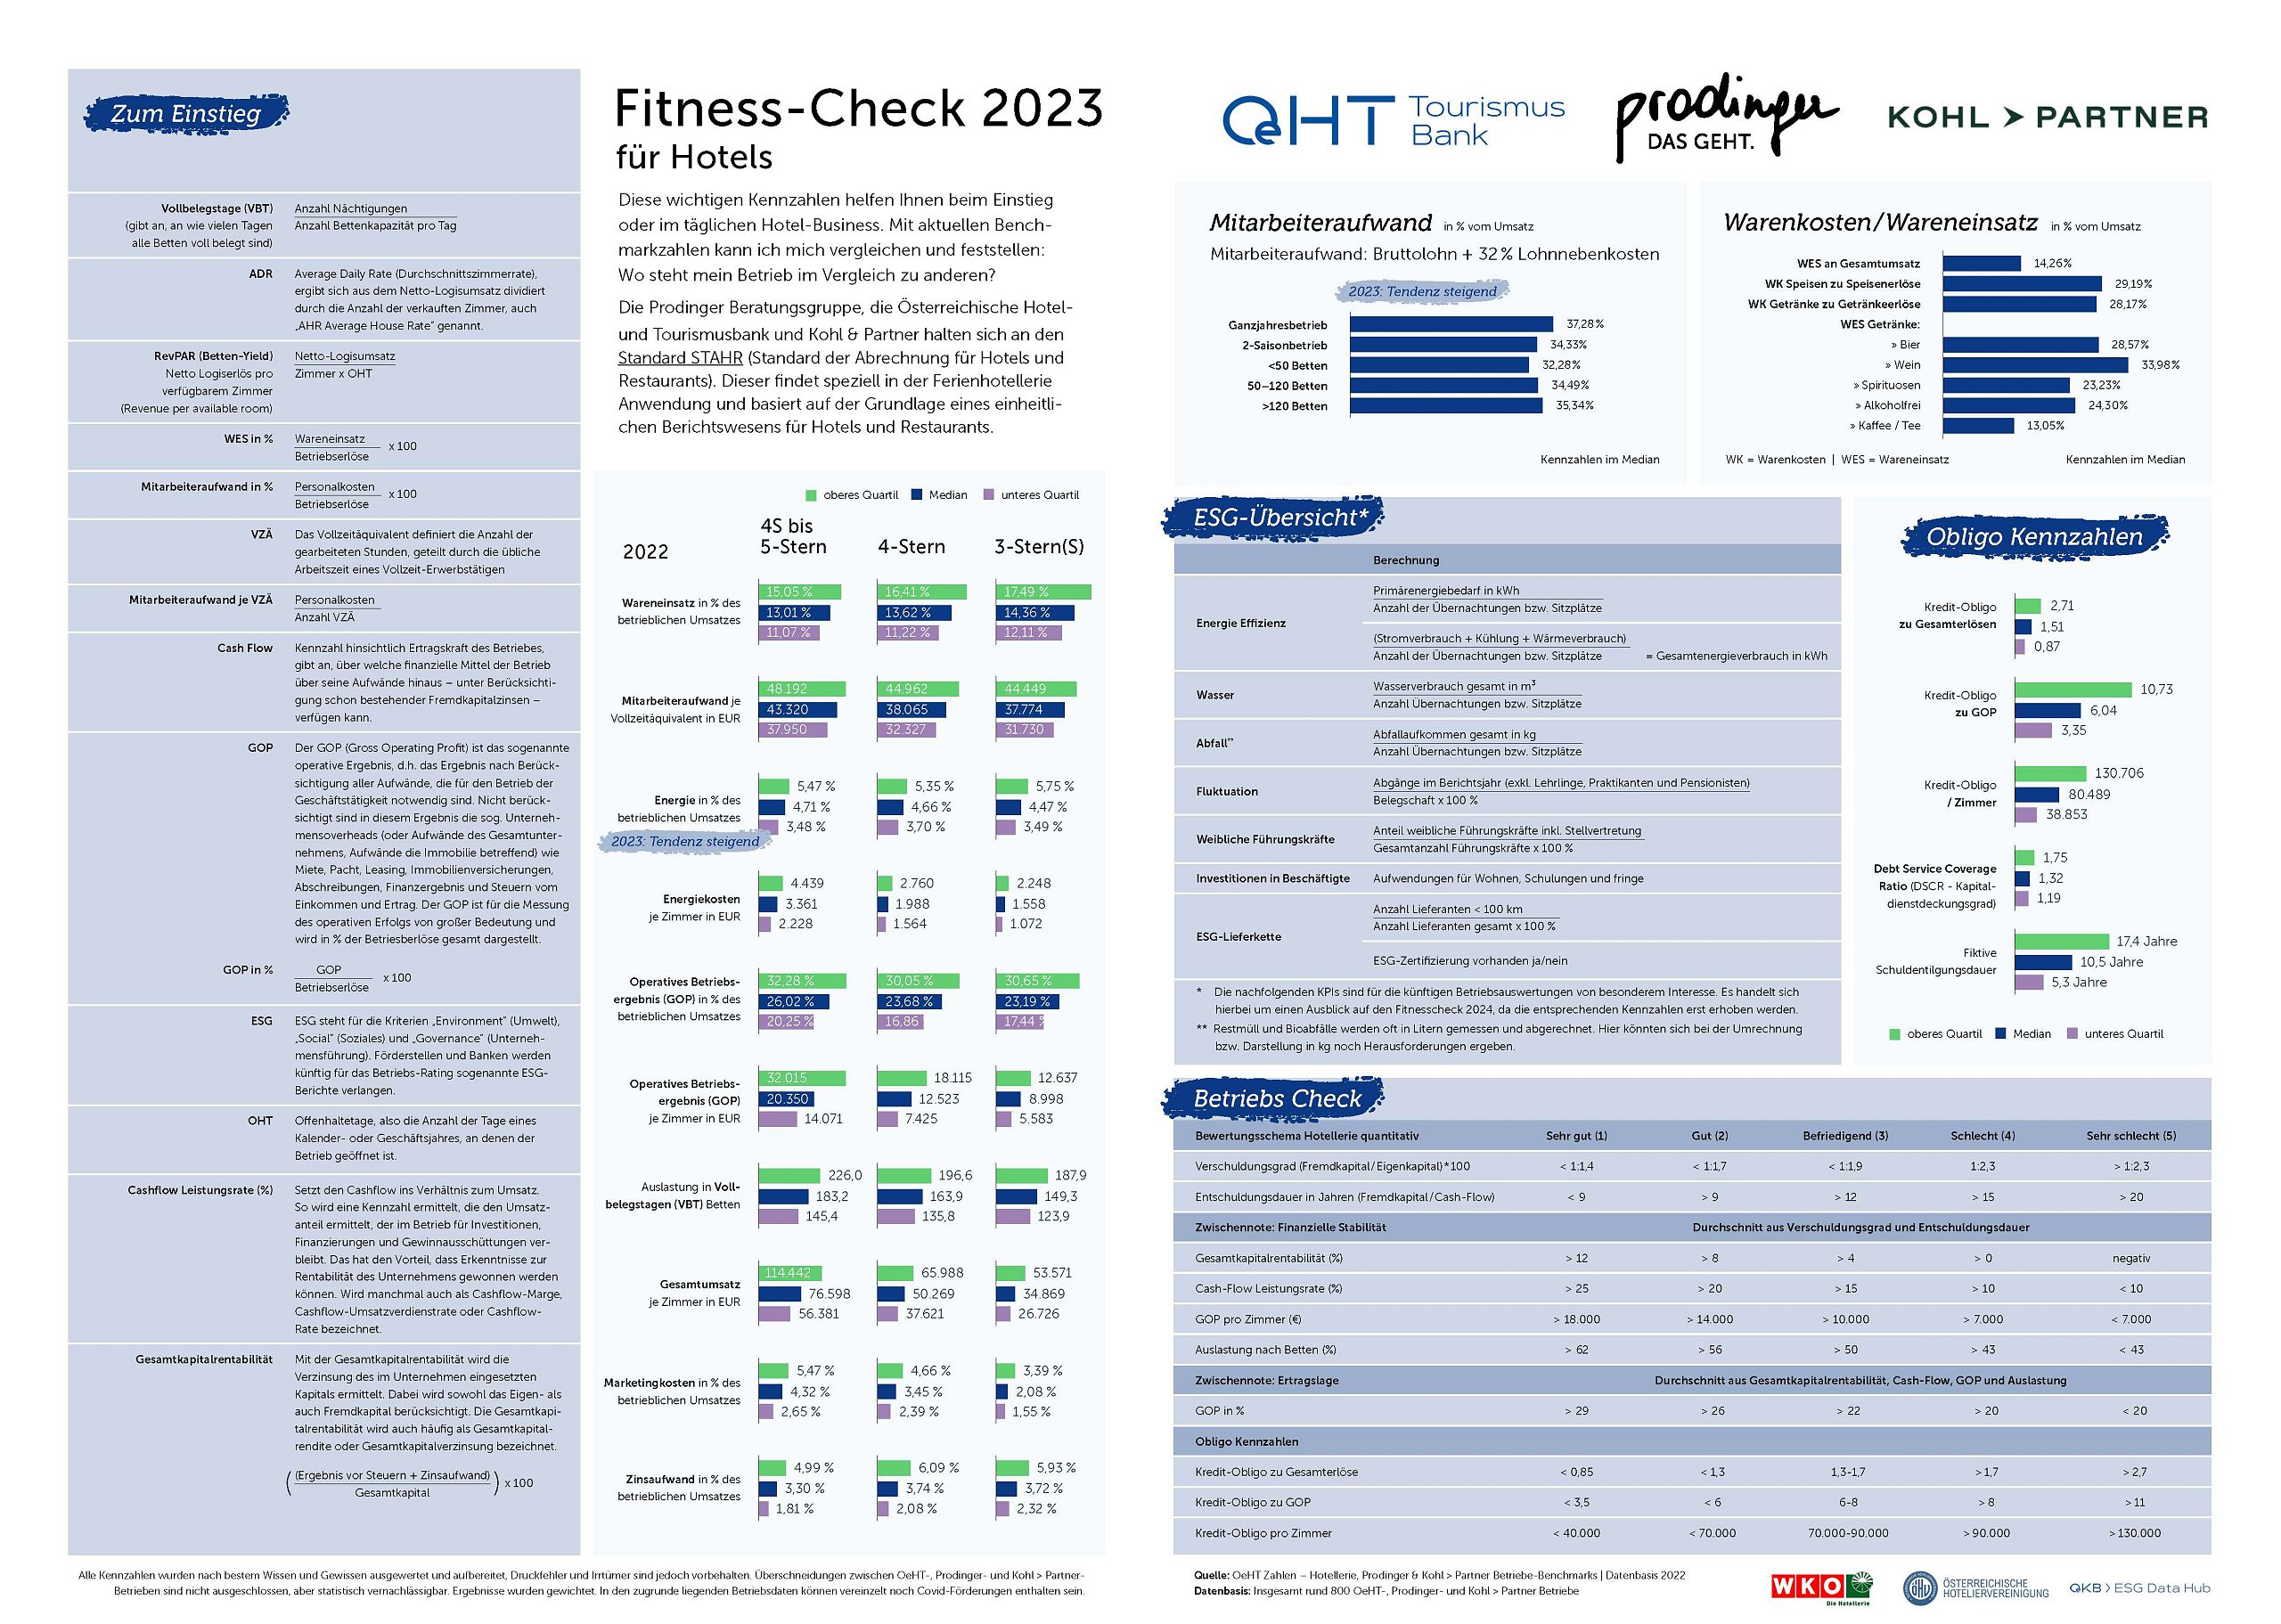 Neue Hotel-Benchmarks - Fitness-Check 2023